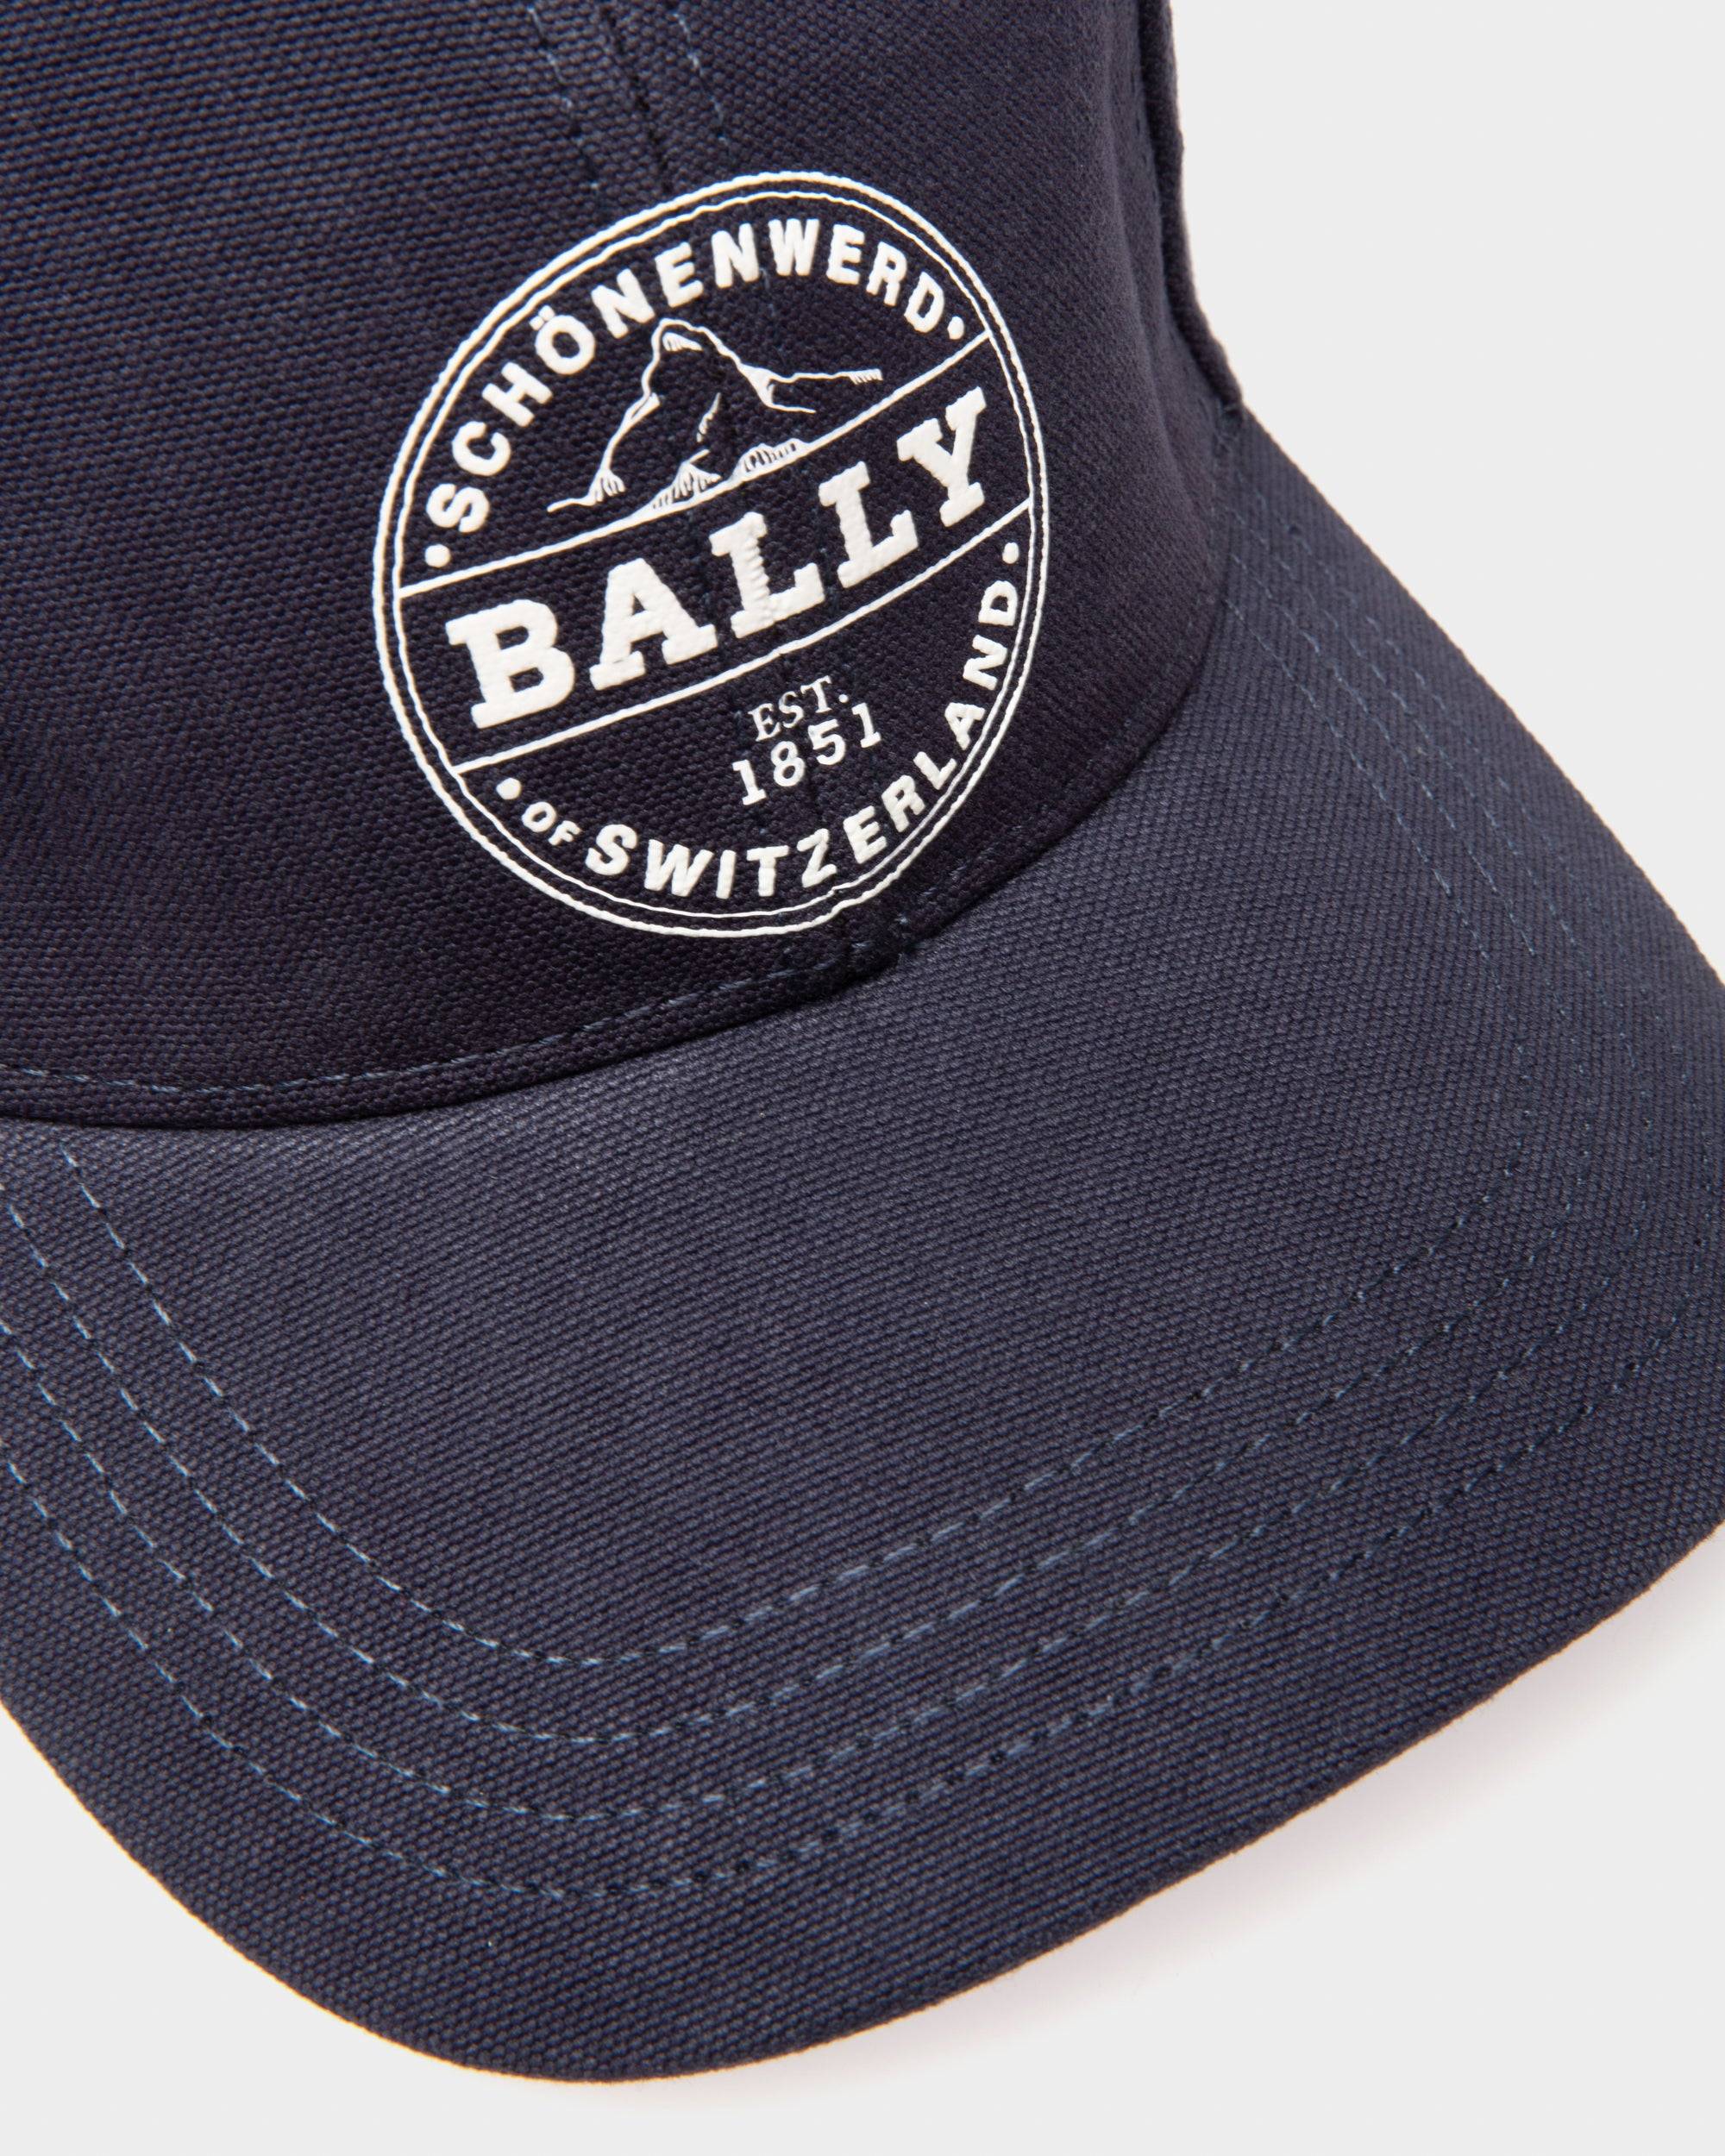 Cappellino Da Baseball In Cotone Biologico Blu Navy - Bally - 03